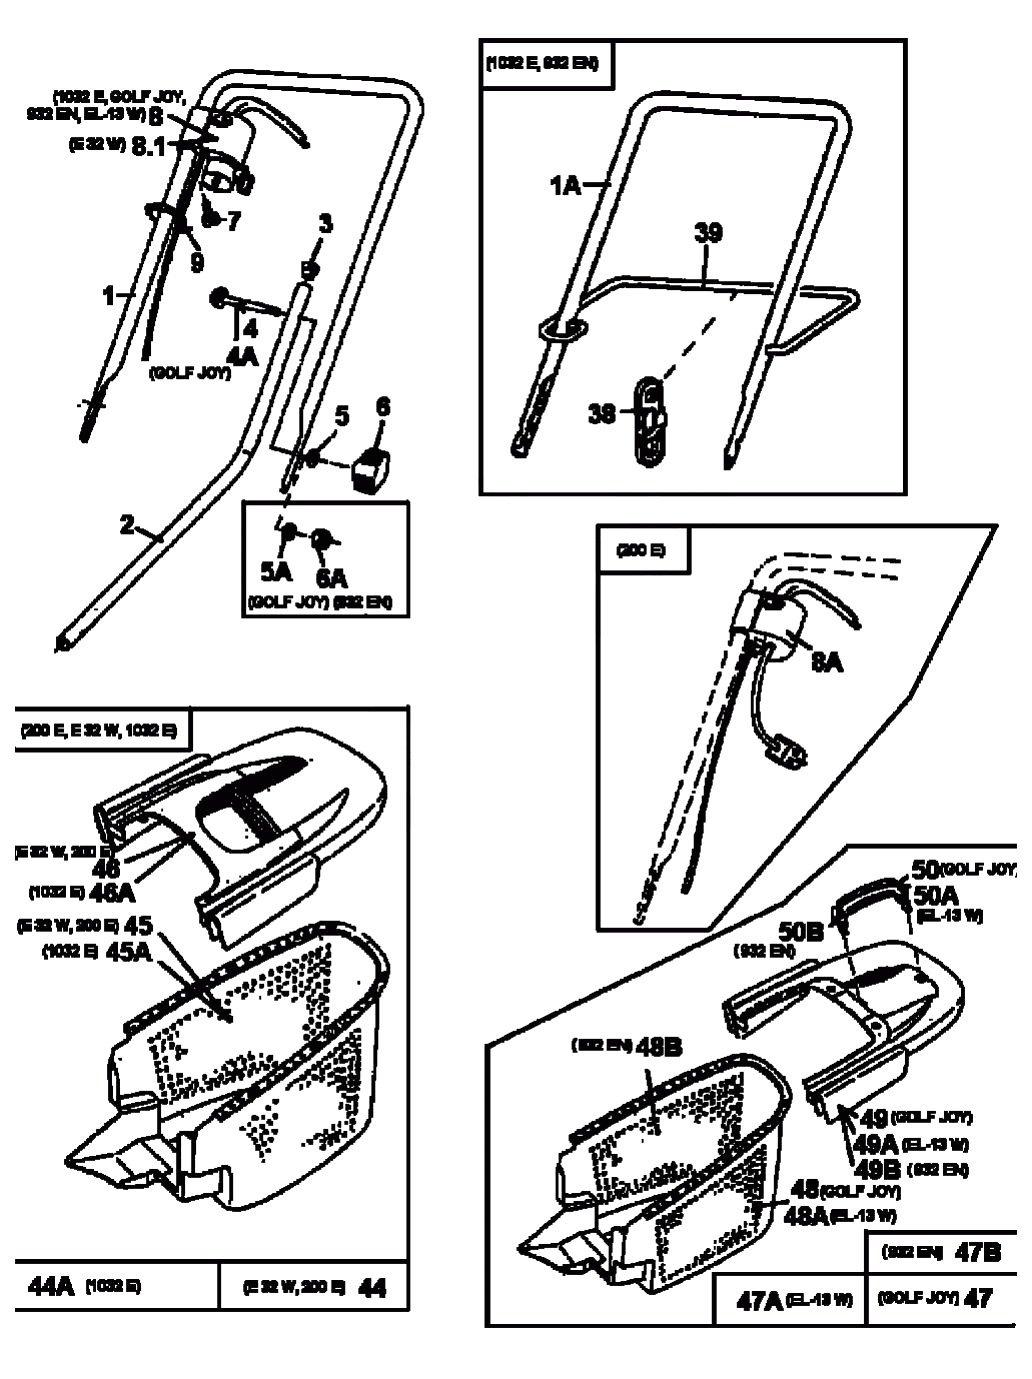 MTD Артикул 18B-C3D-678 (год выпуска 2000). Травосборник, ручка